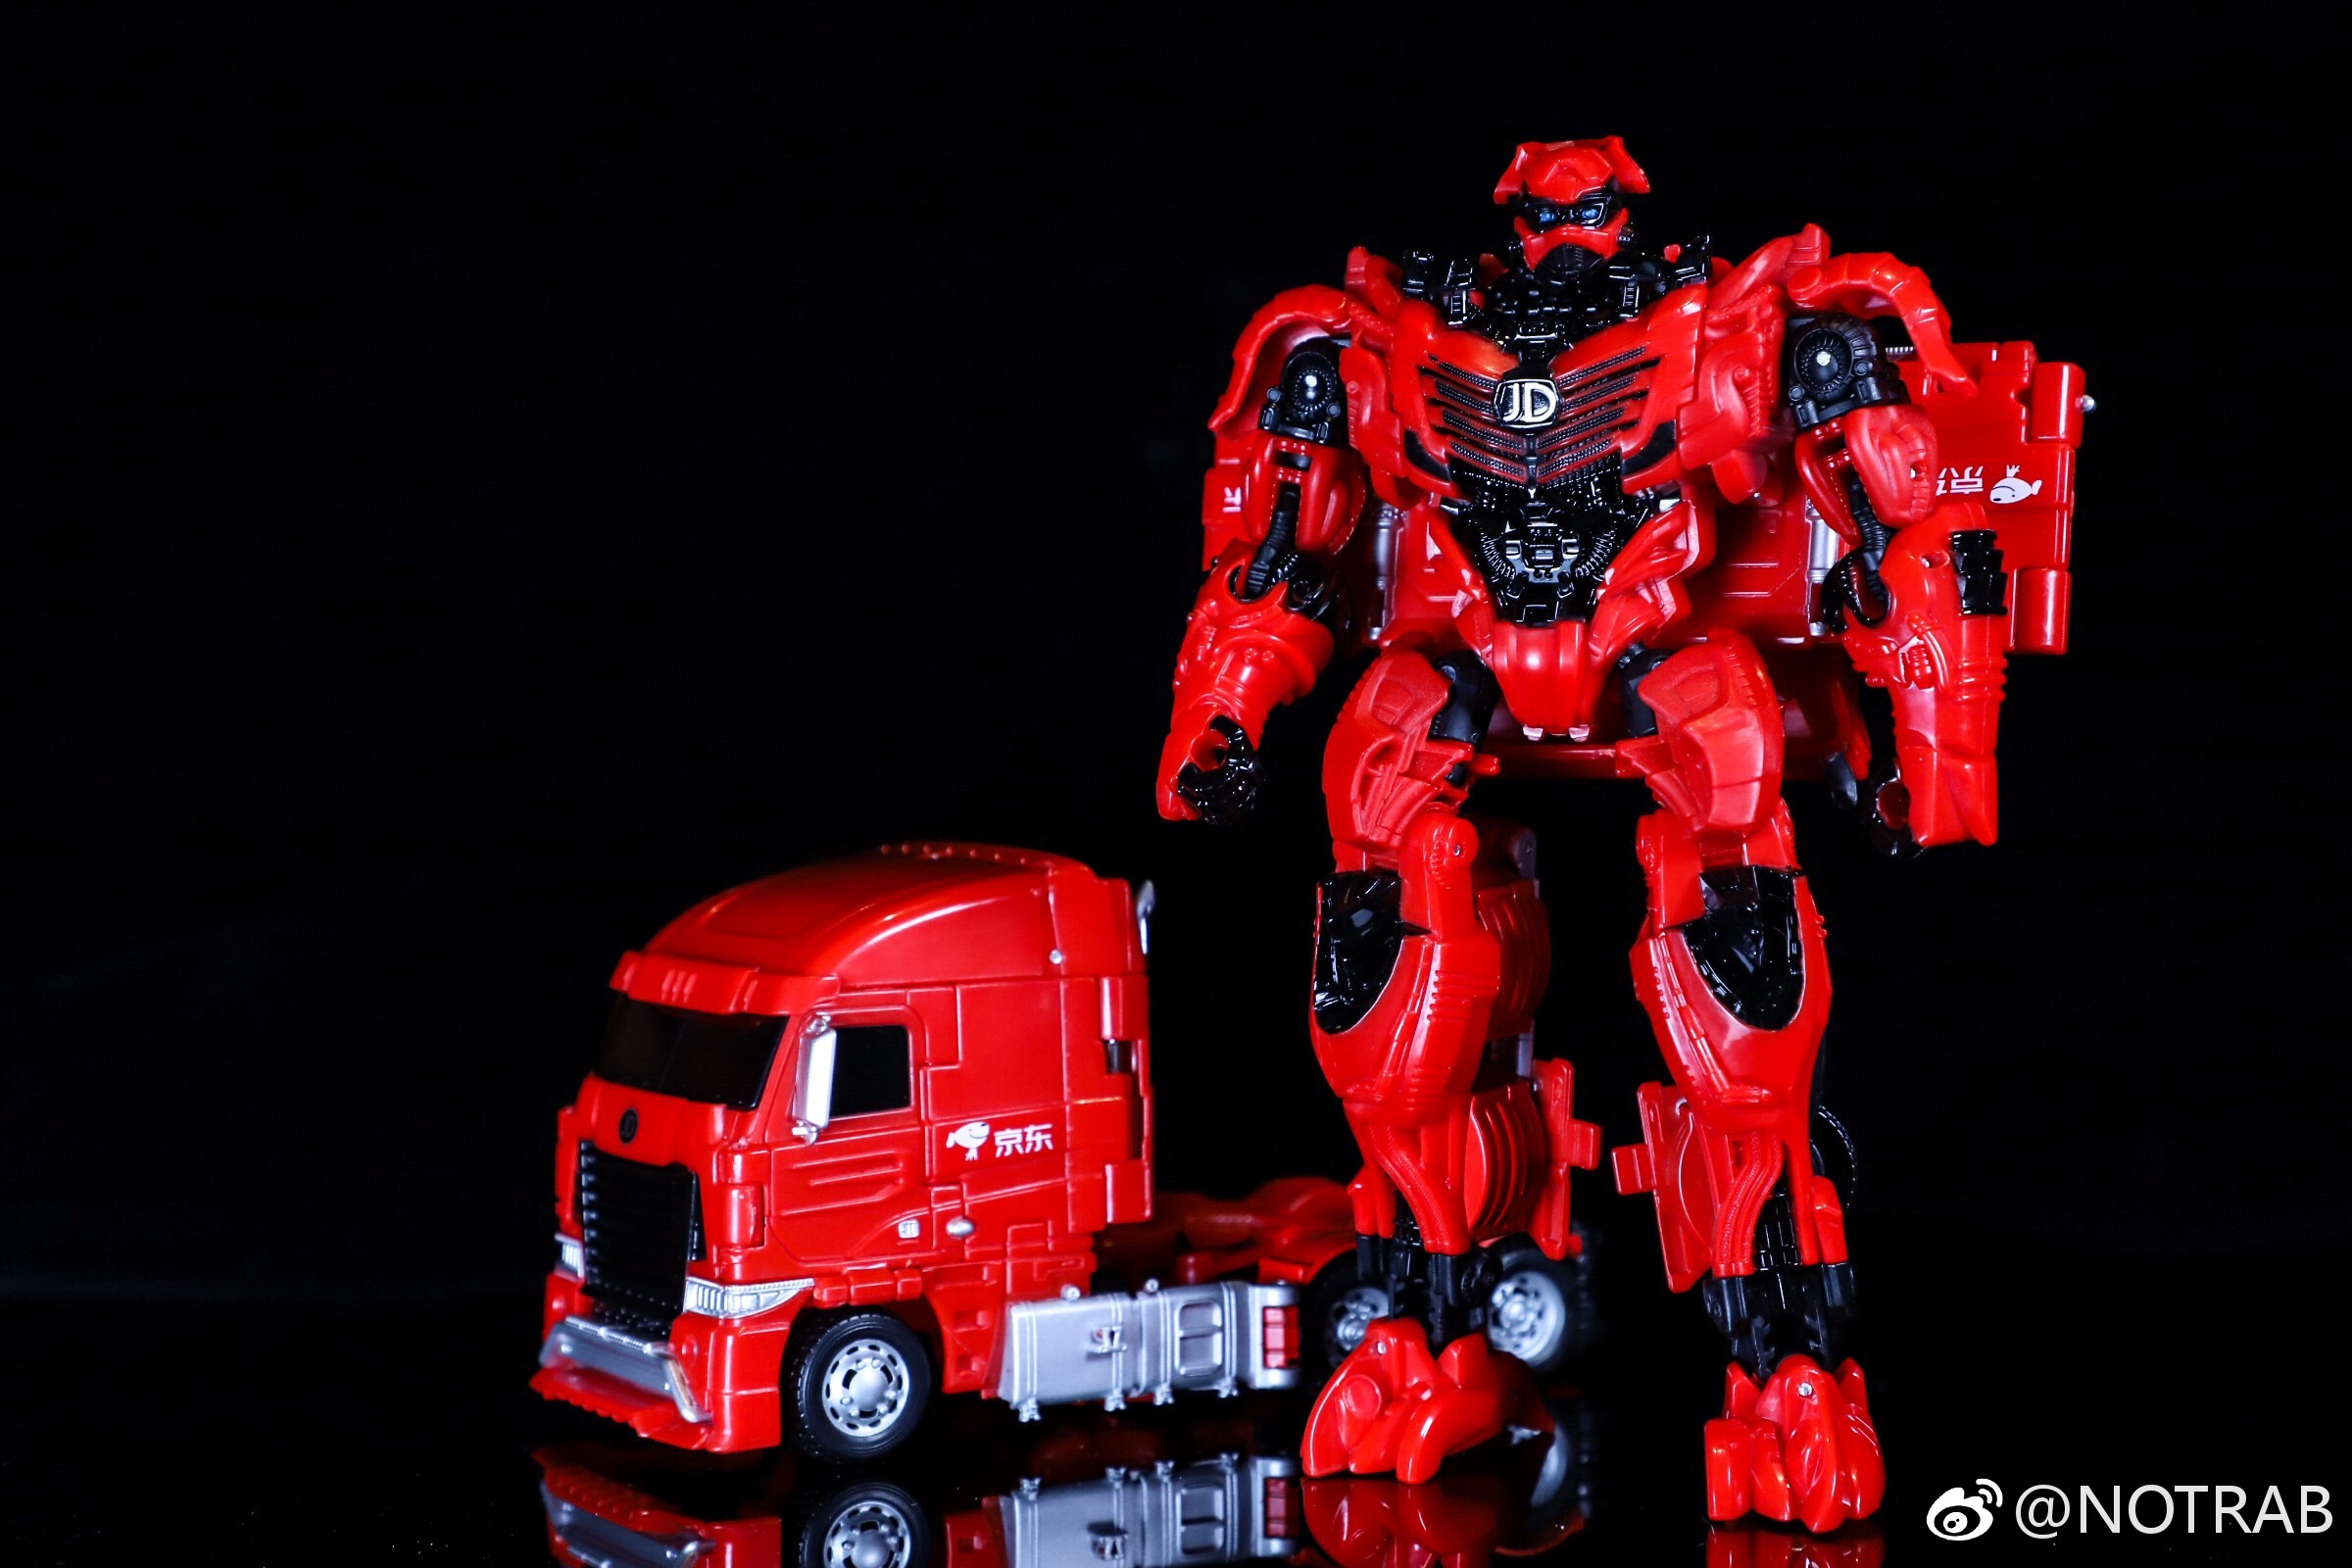 jd red knight transformers